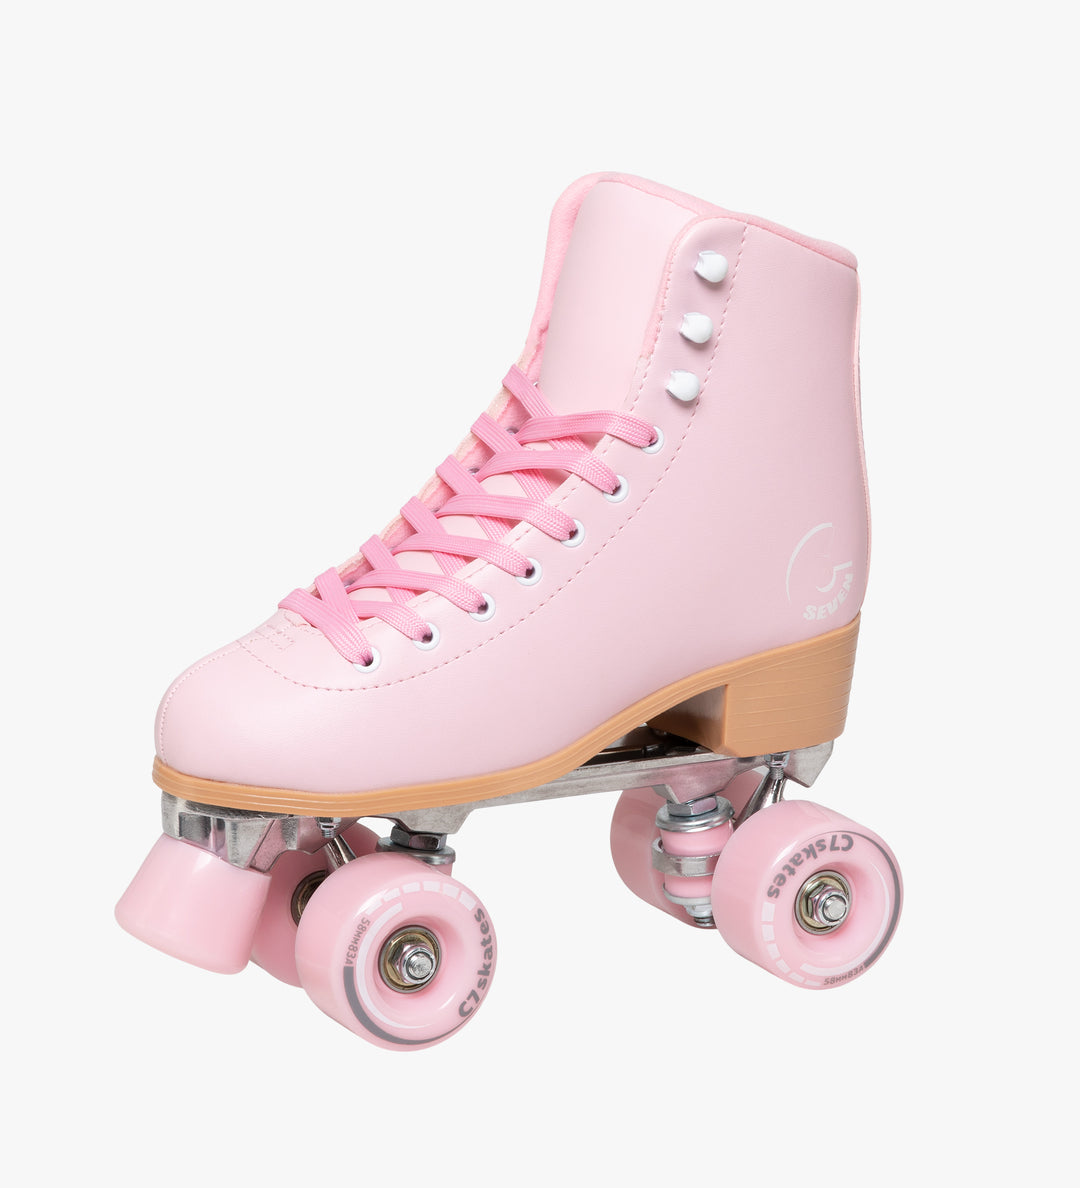 C7skates C7 Cherry Blossom pink boot quad roller skates for women girls men with outdoor 58mm wheels 